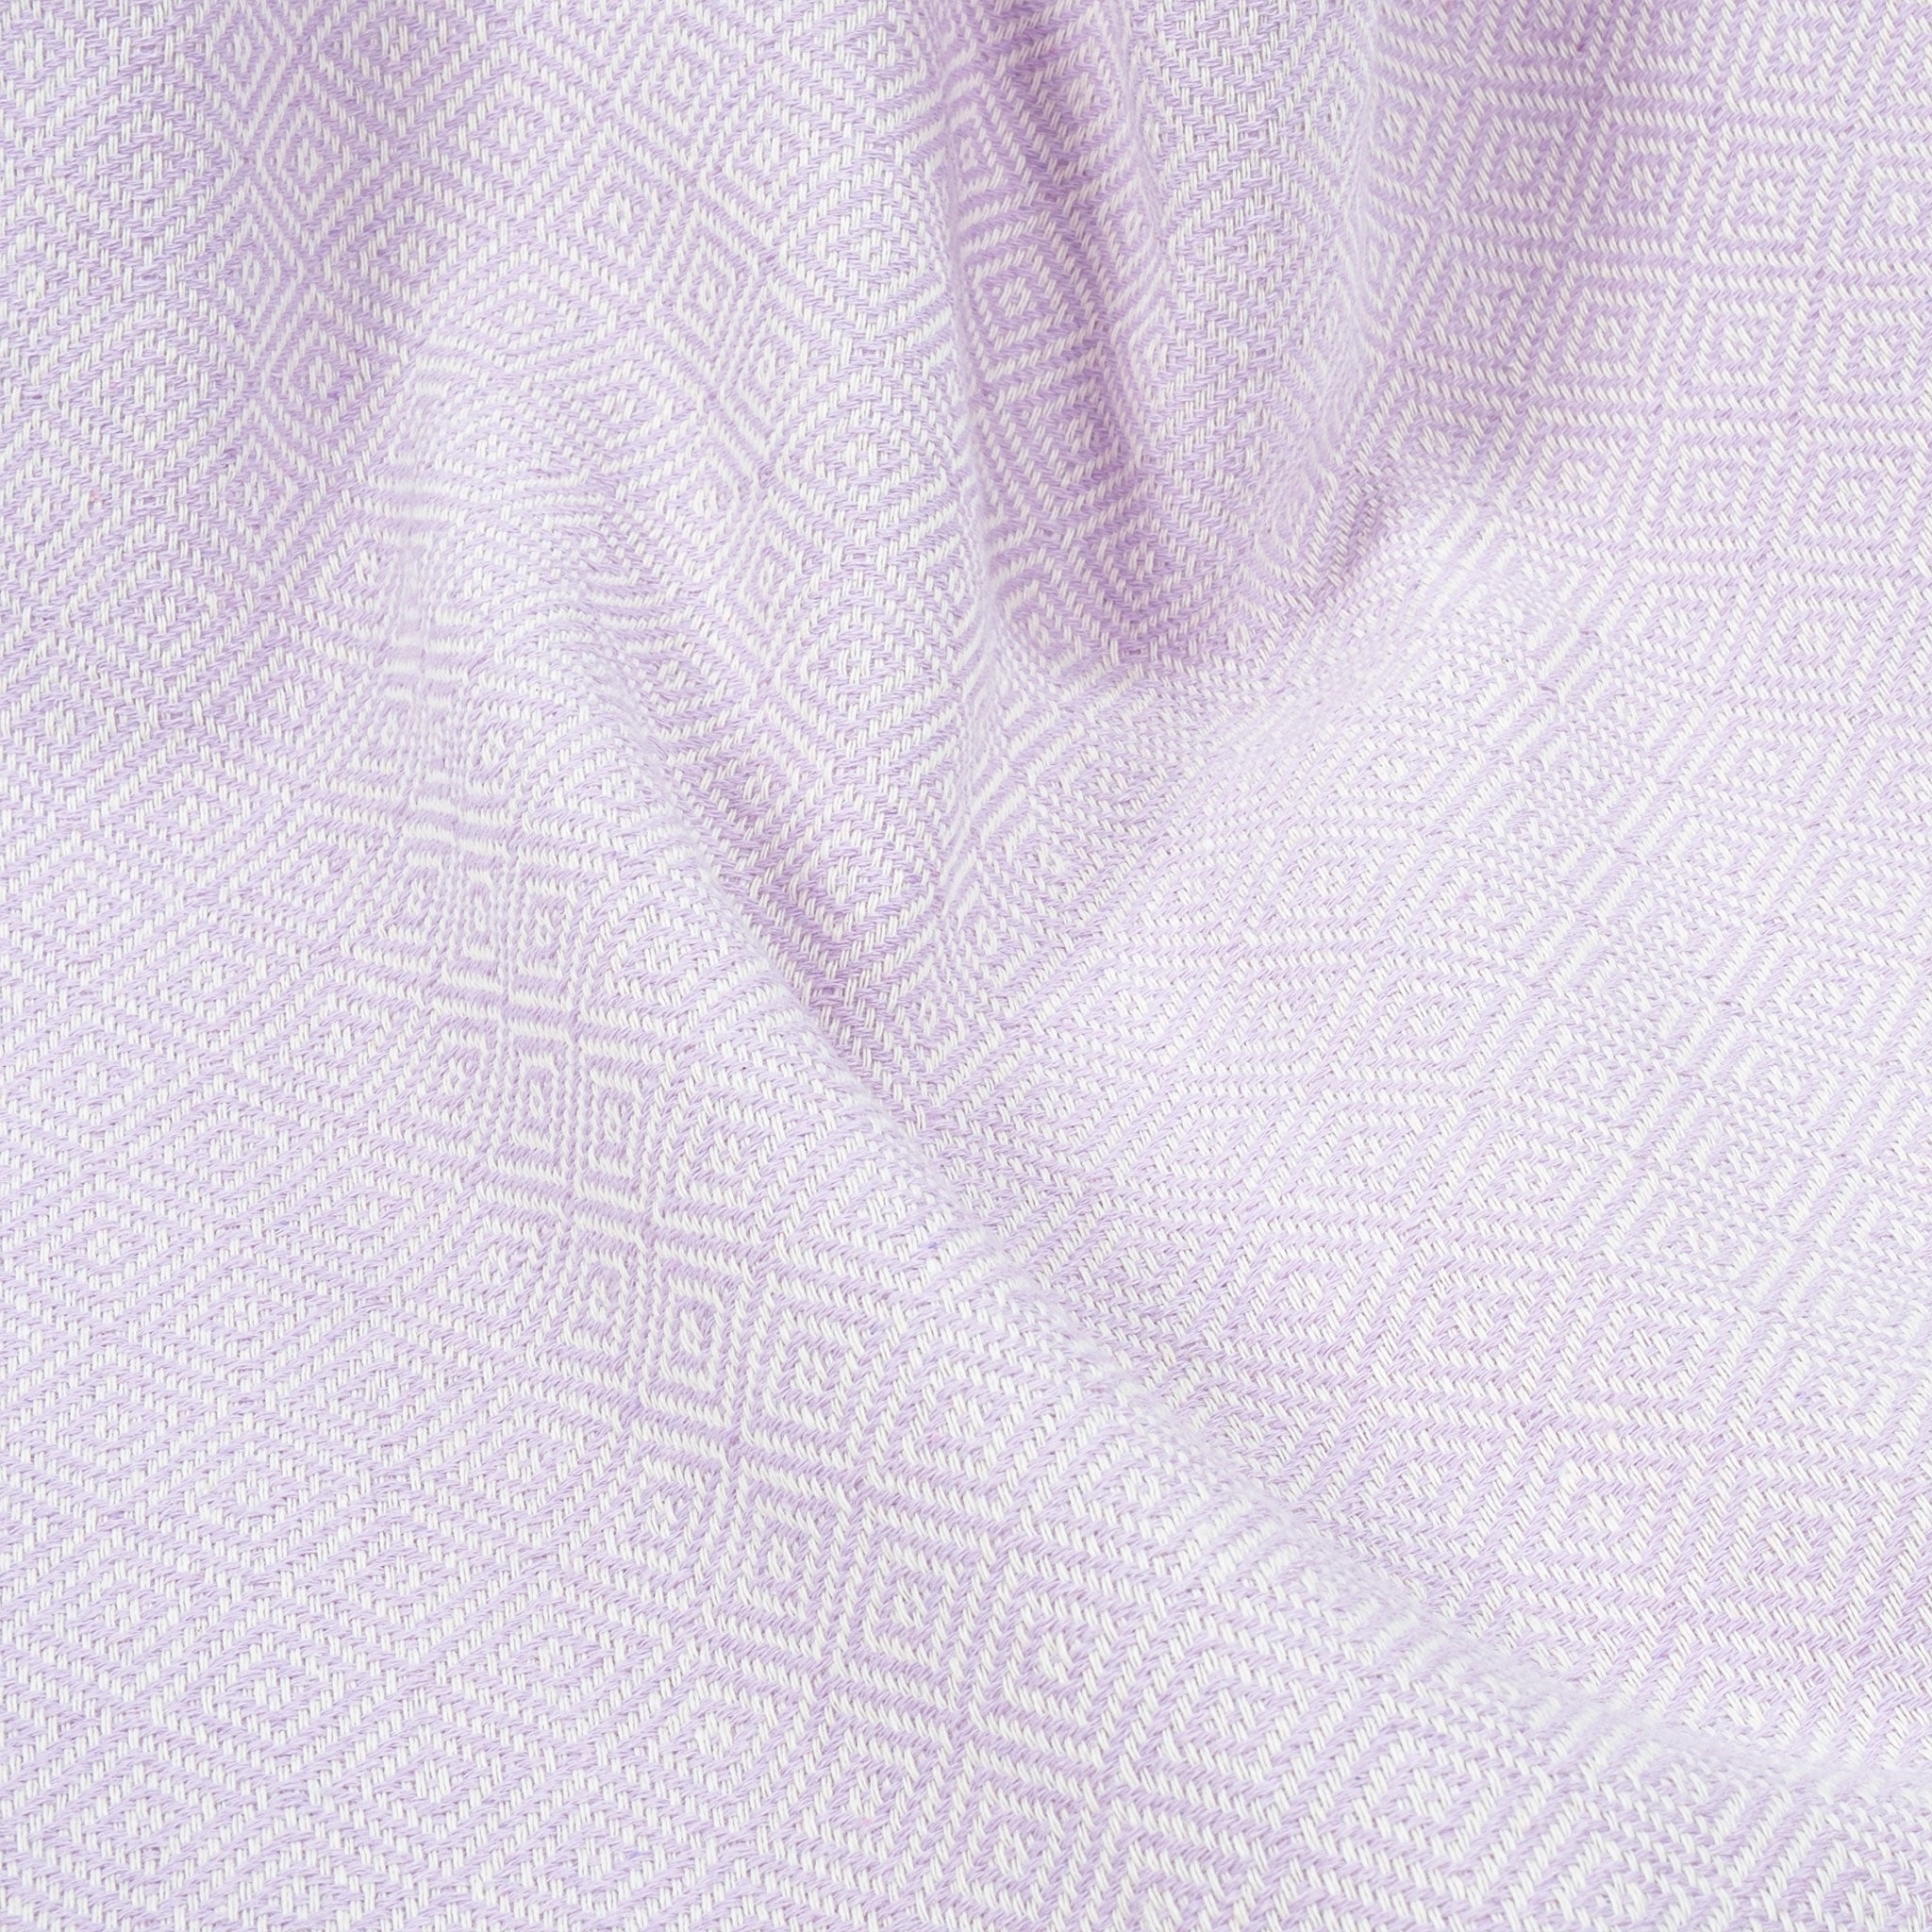 American Soft Linen - 100% Cotton Turkish Peshtemal Towels 40x70 Inches - Lilac - 2